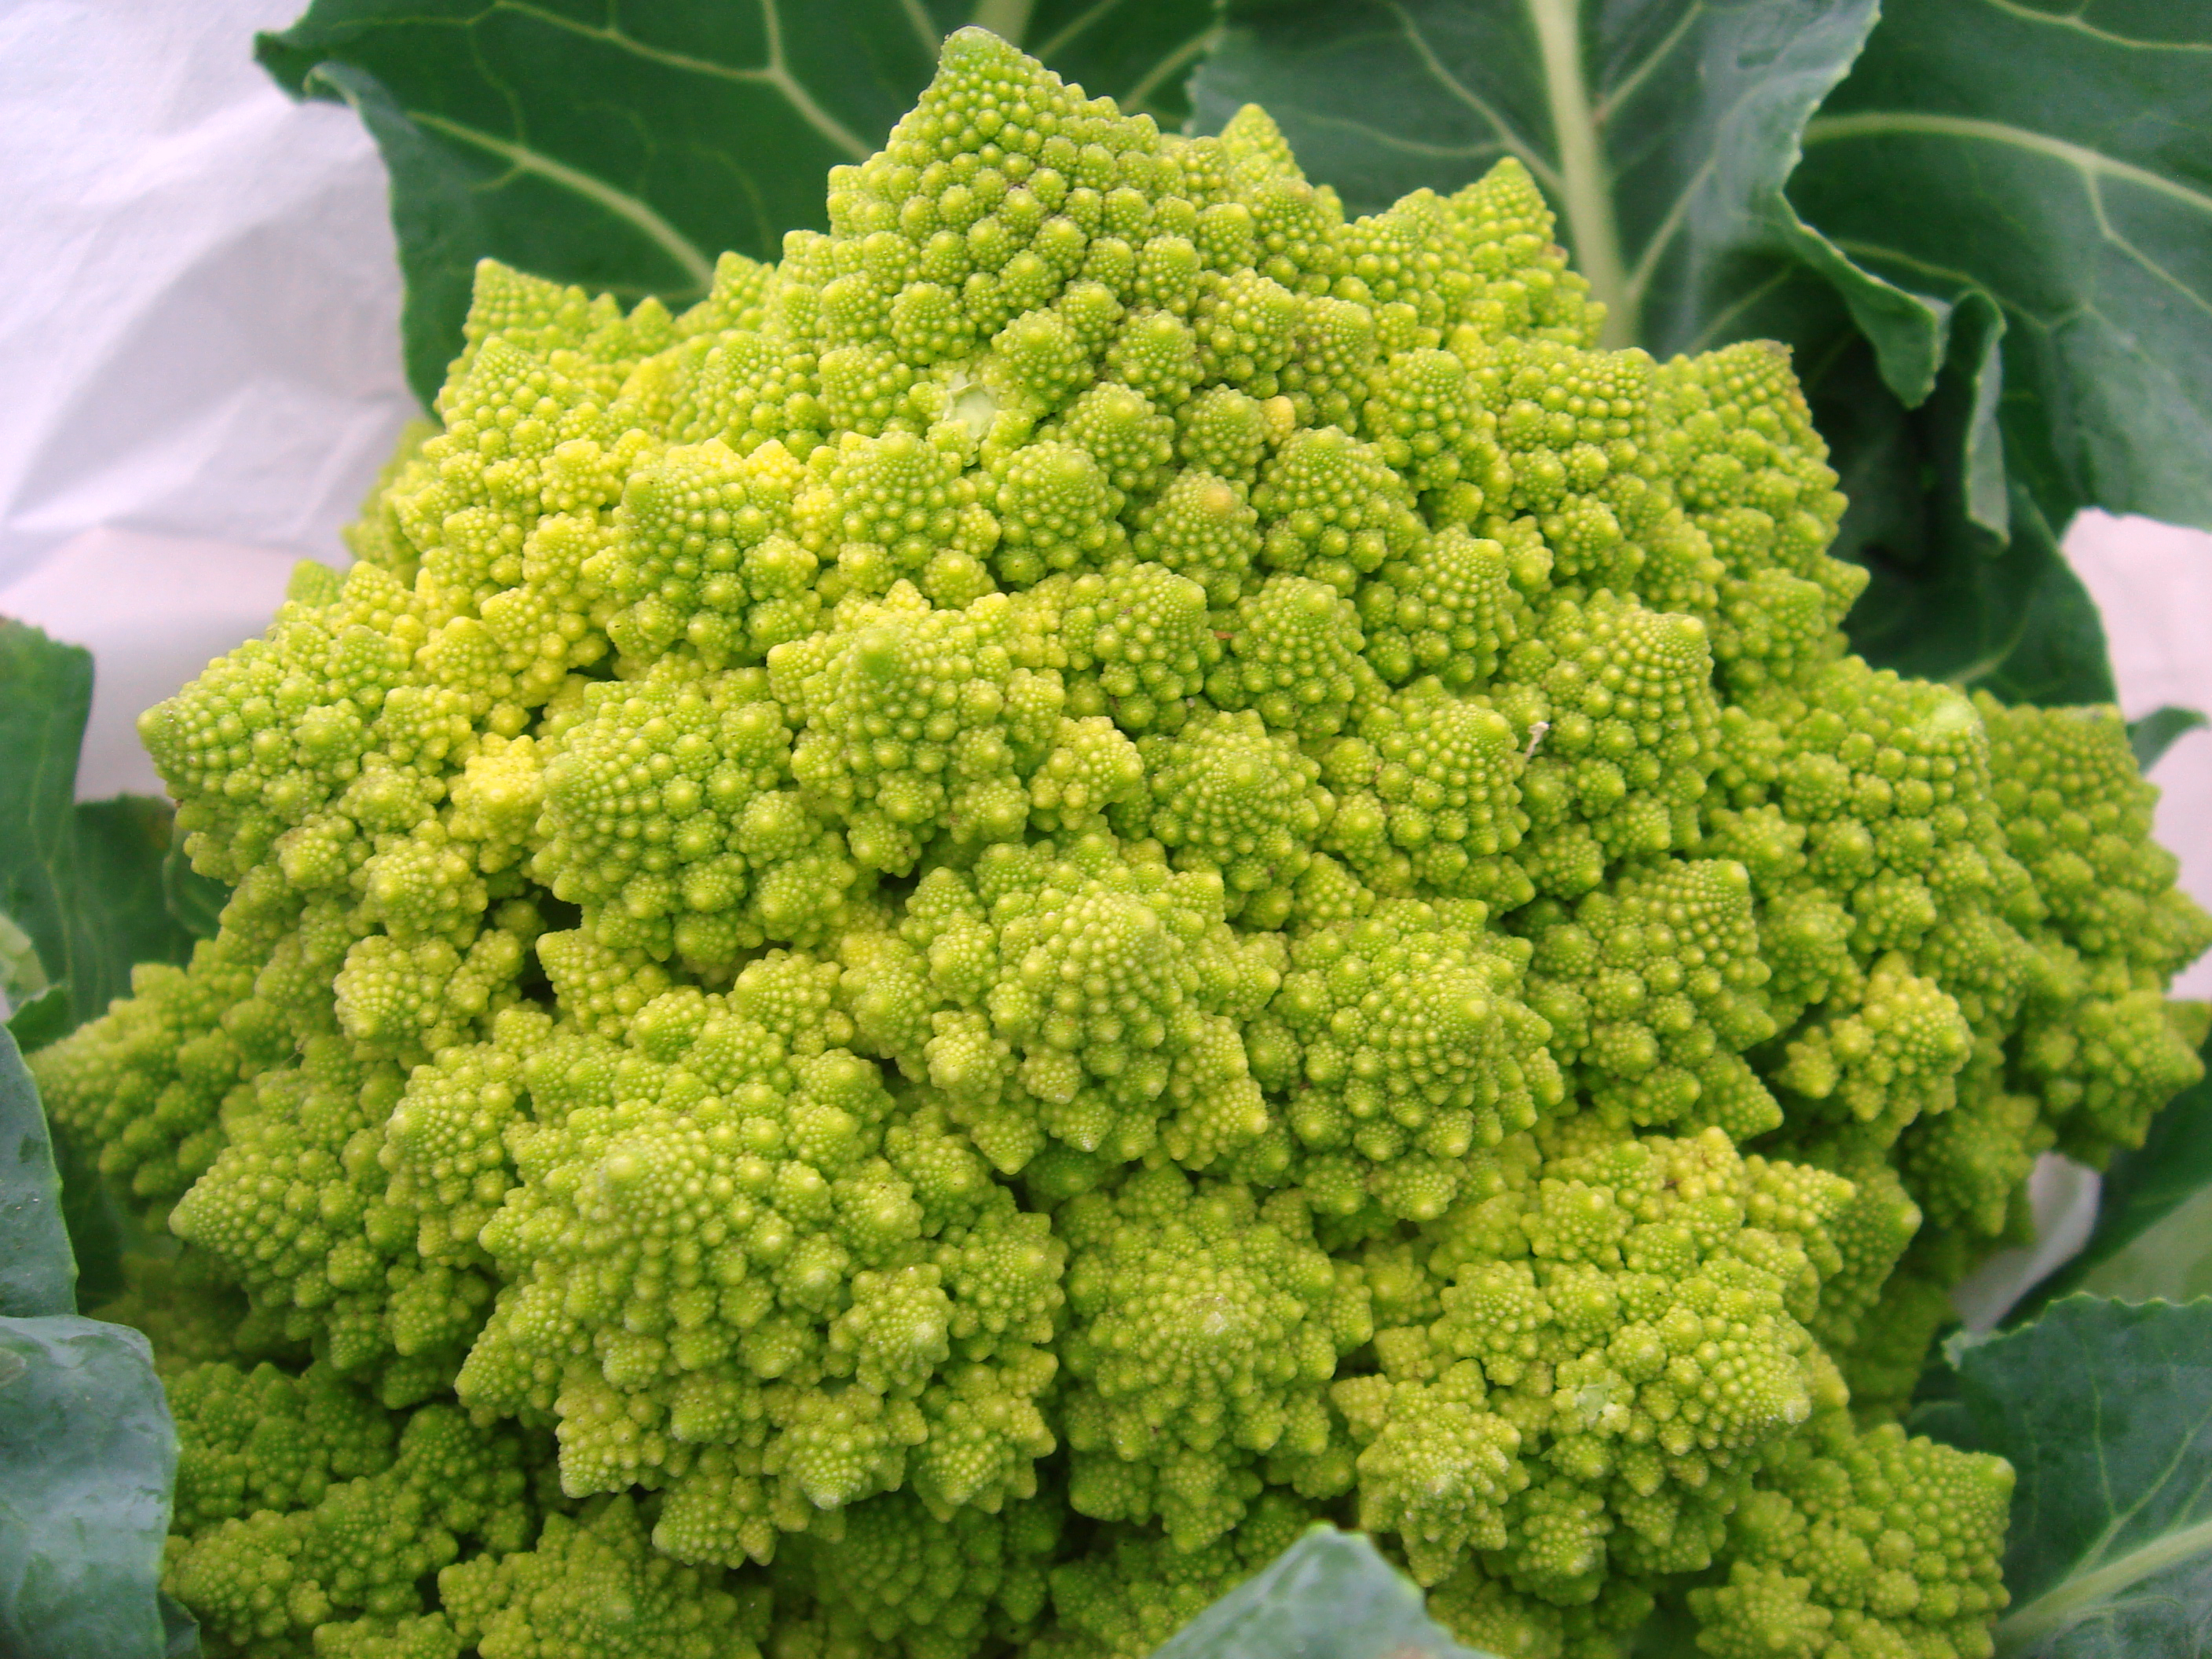 The Romanesco broccoli, fractal by nature. Image Credit: Leon Brocard via Flickr  ( License )